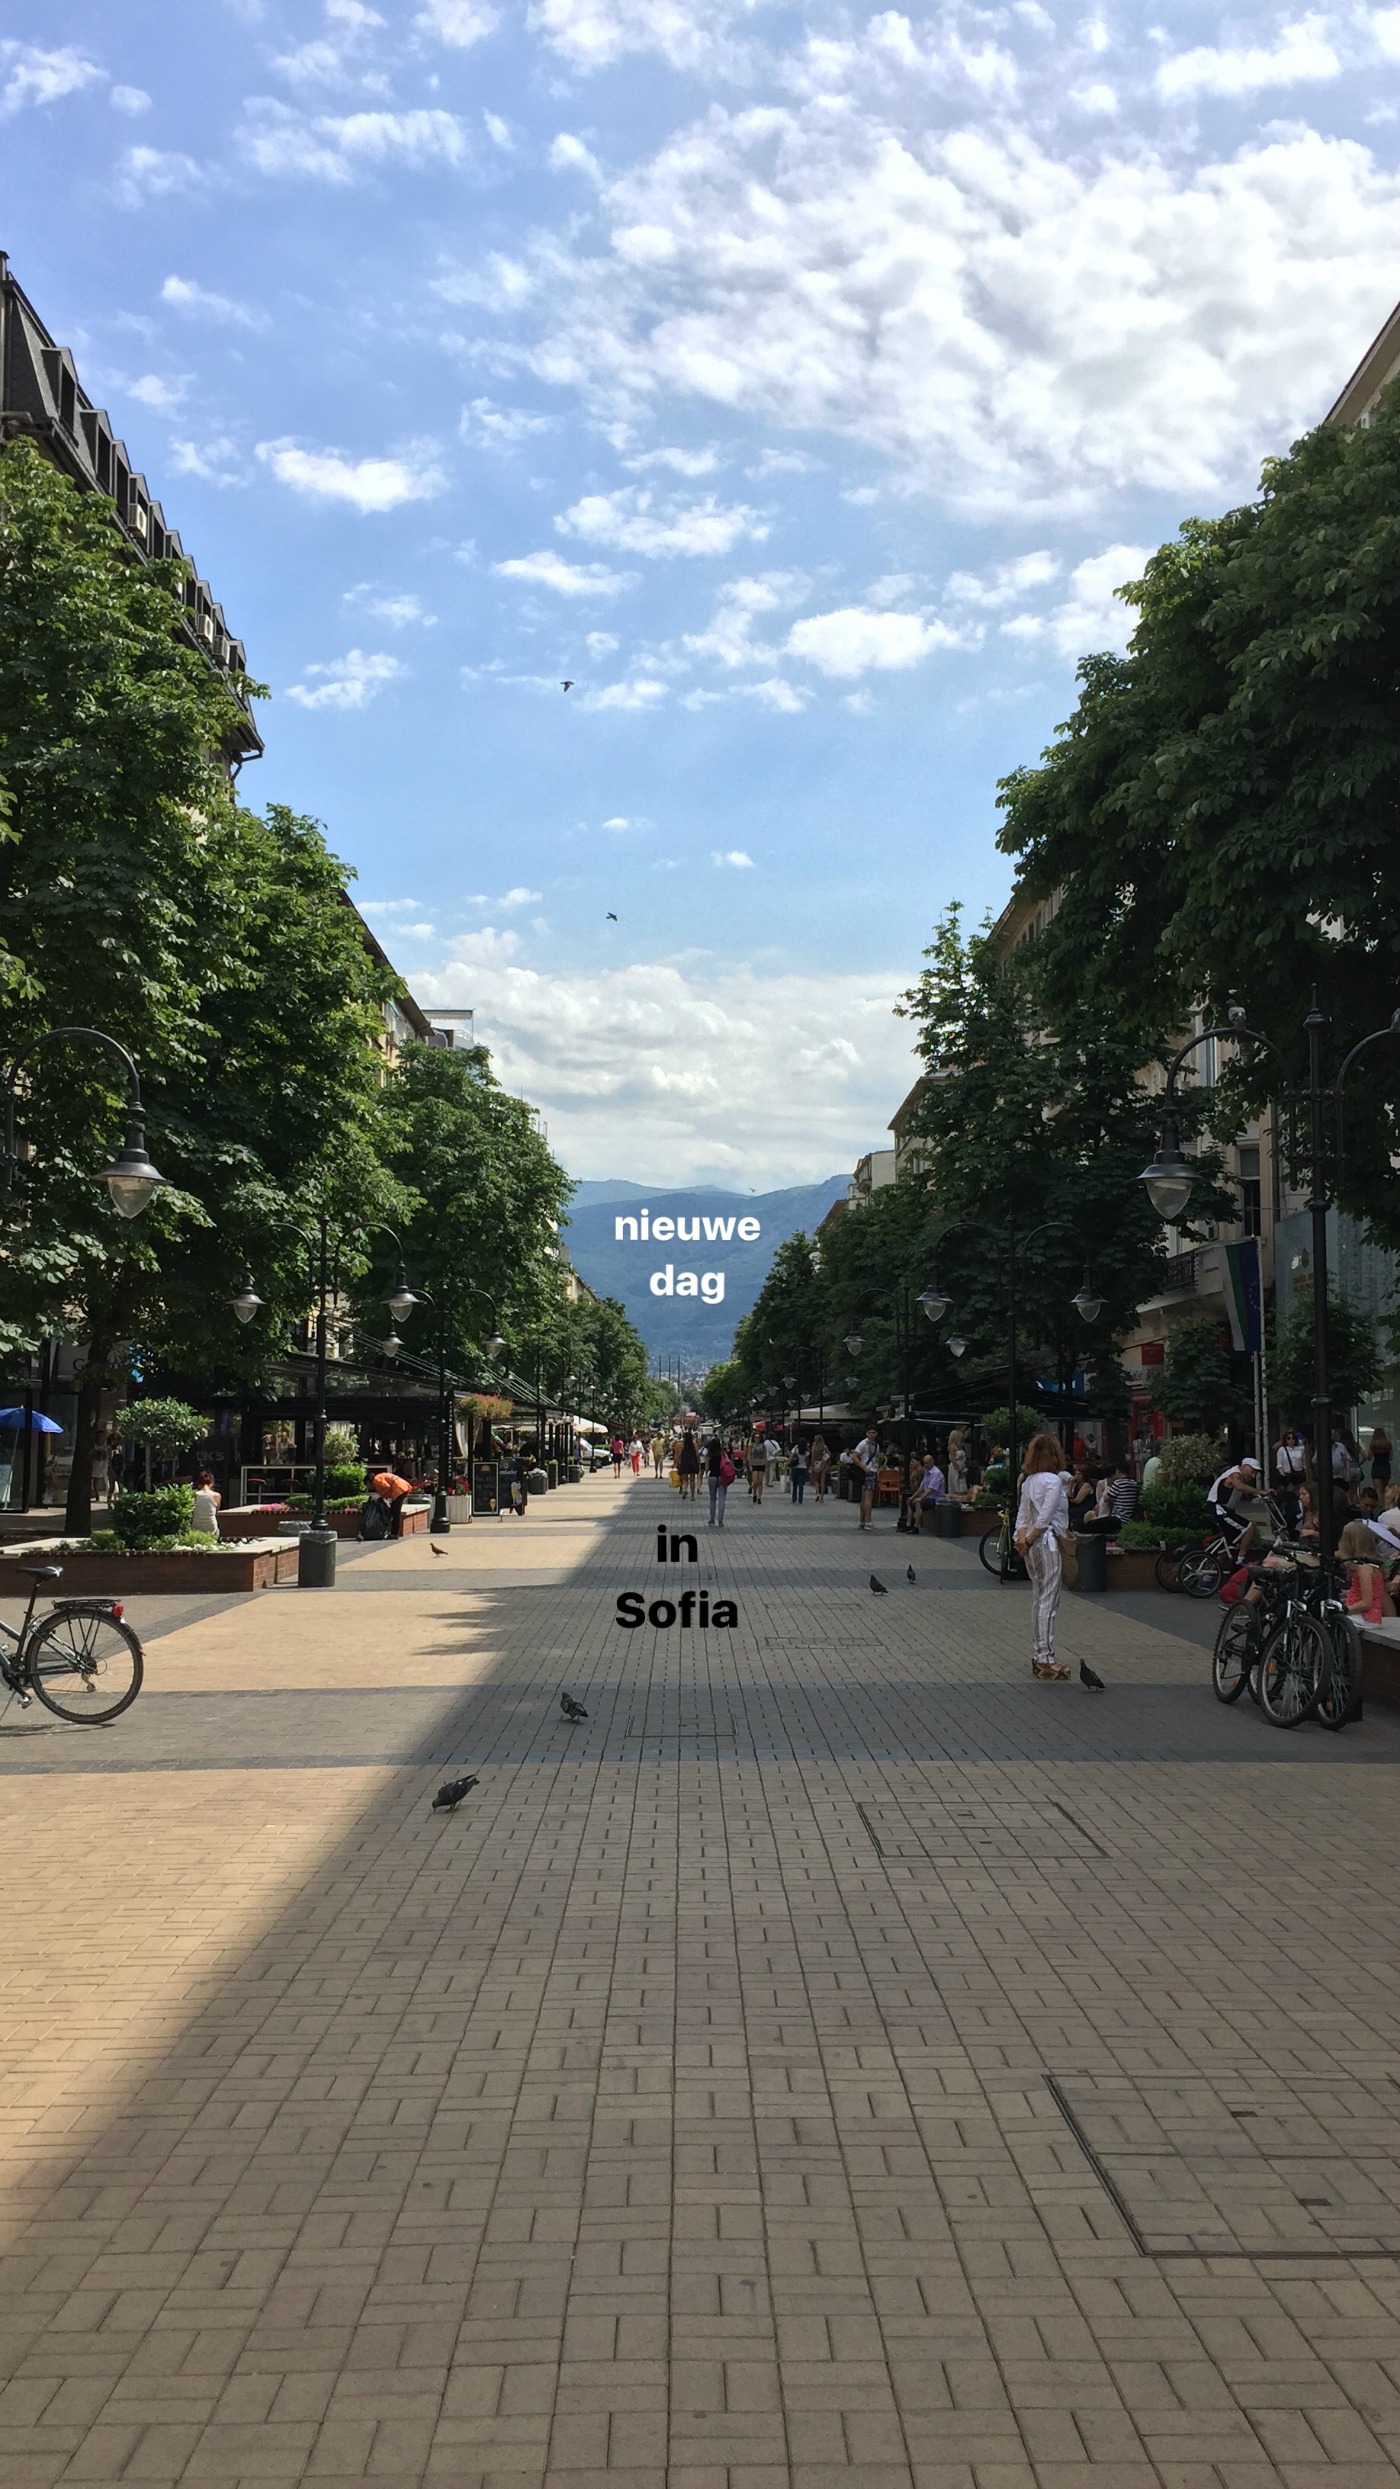 Sofia hotspots